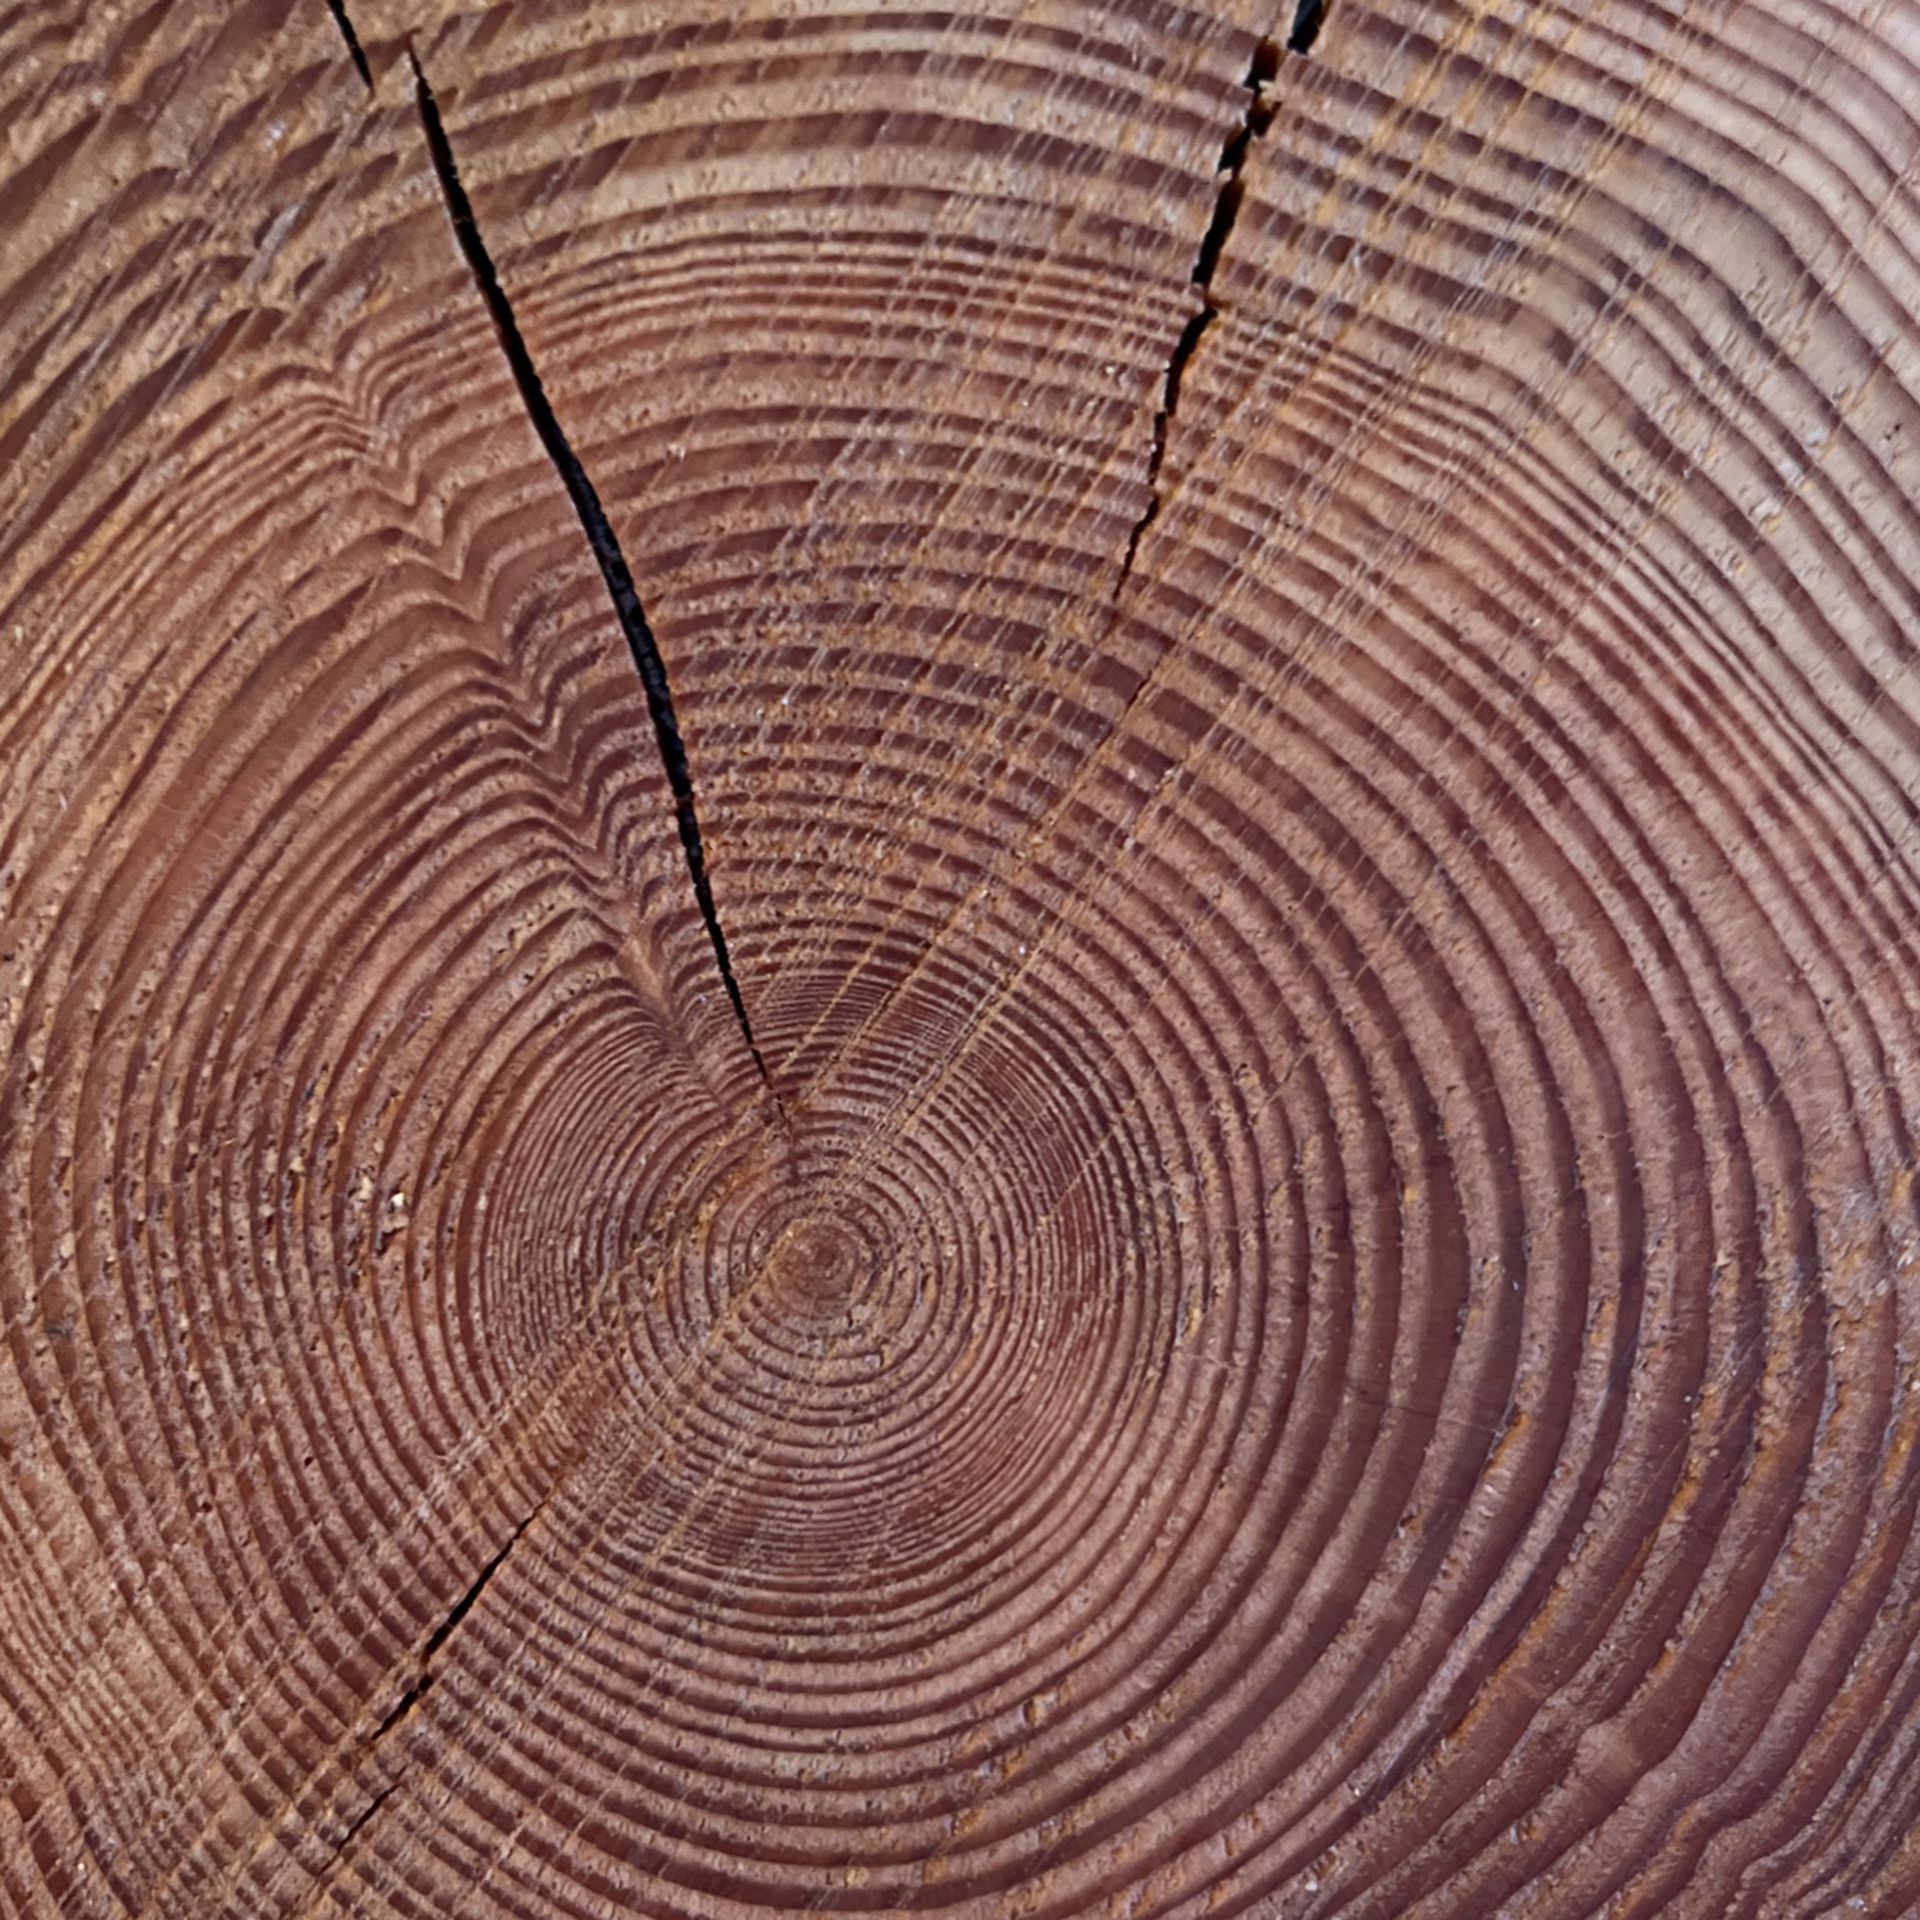 Wood Rounds Centerpieces 